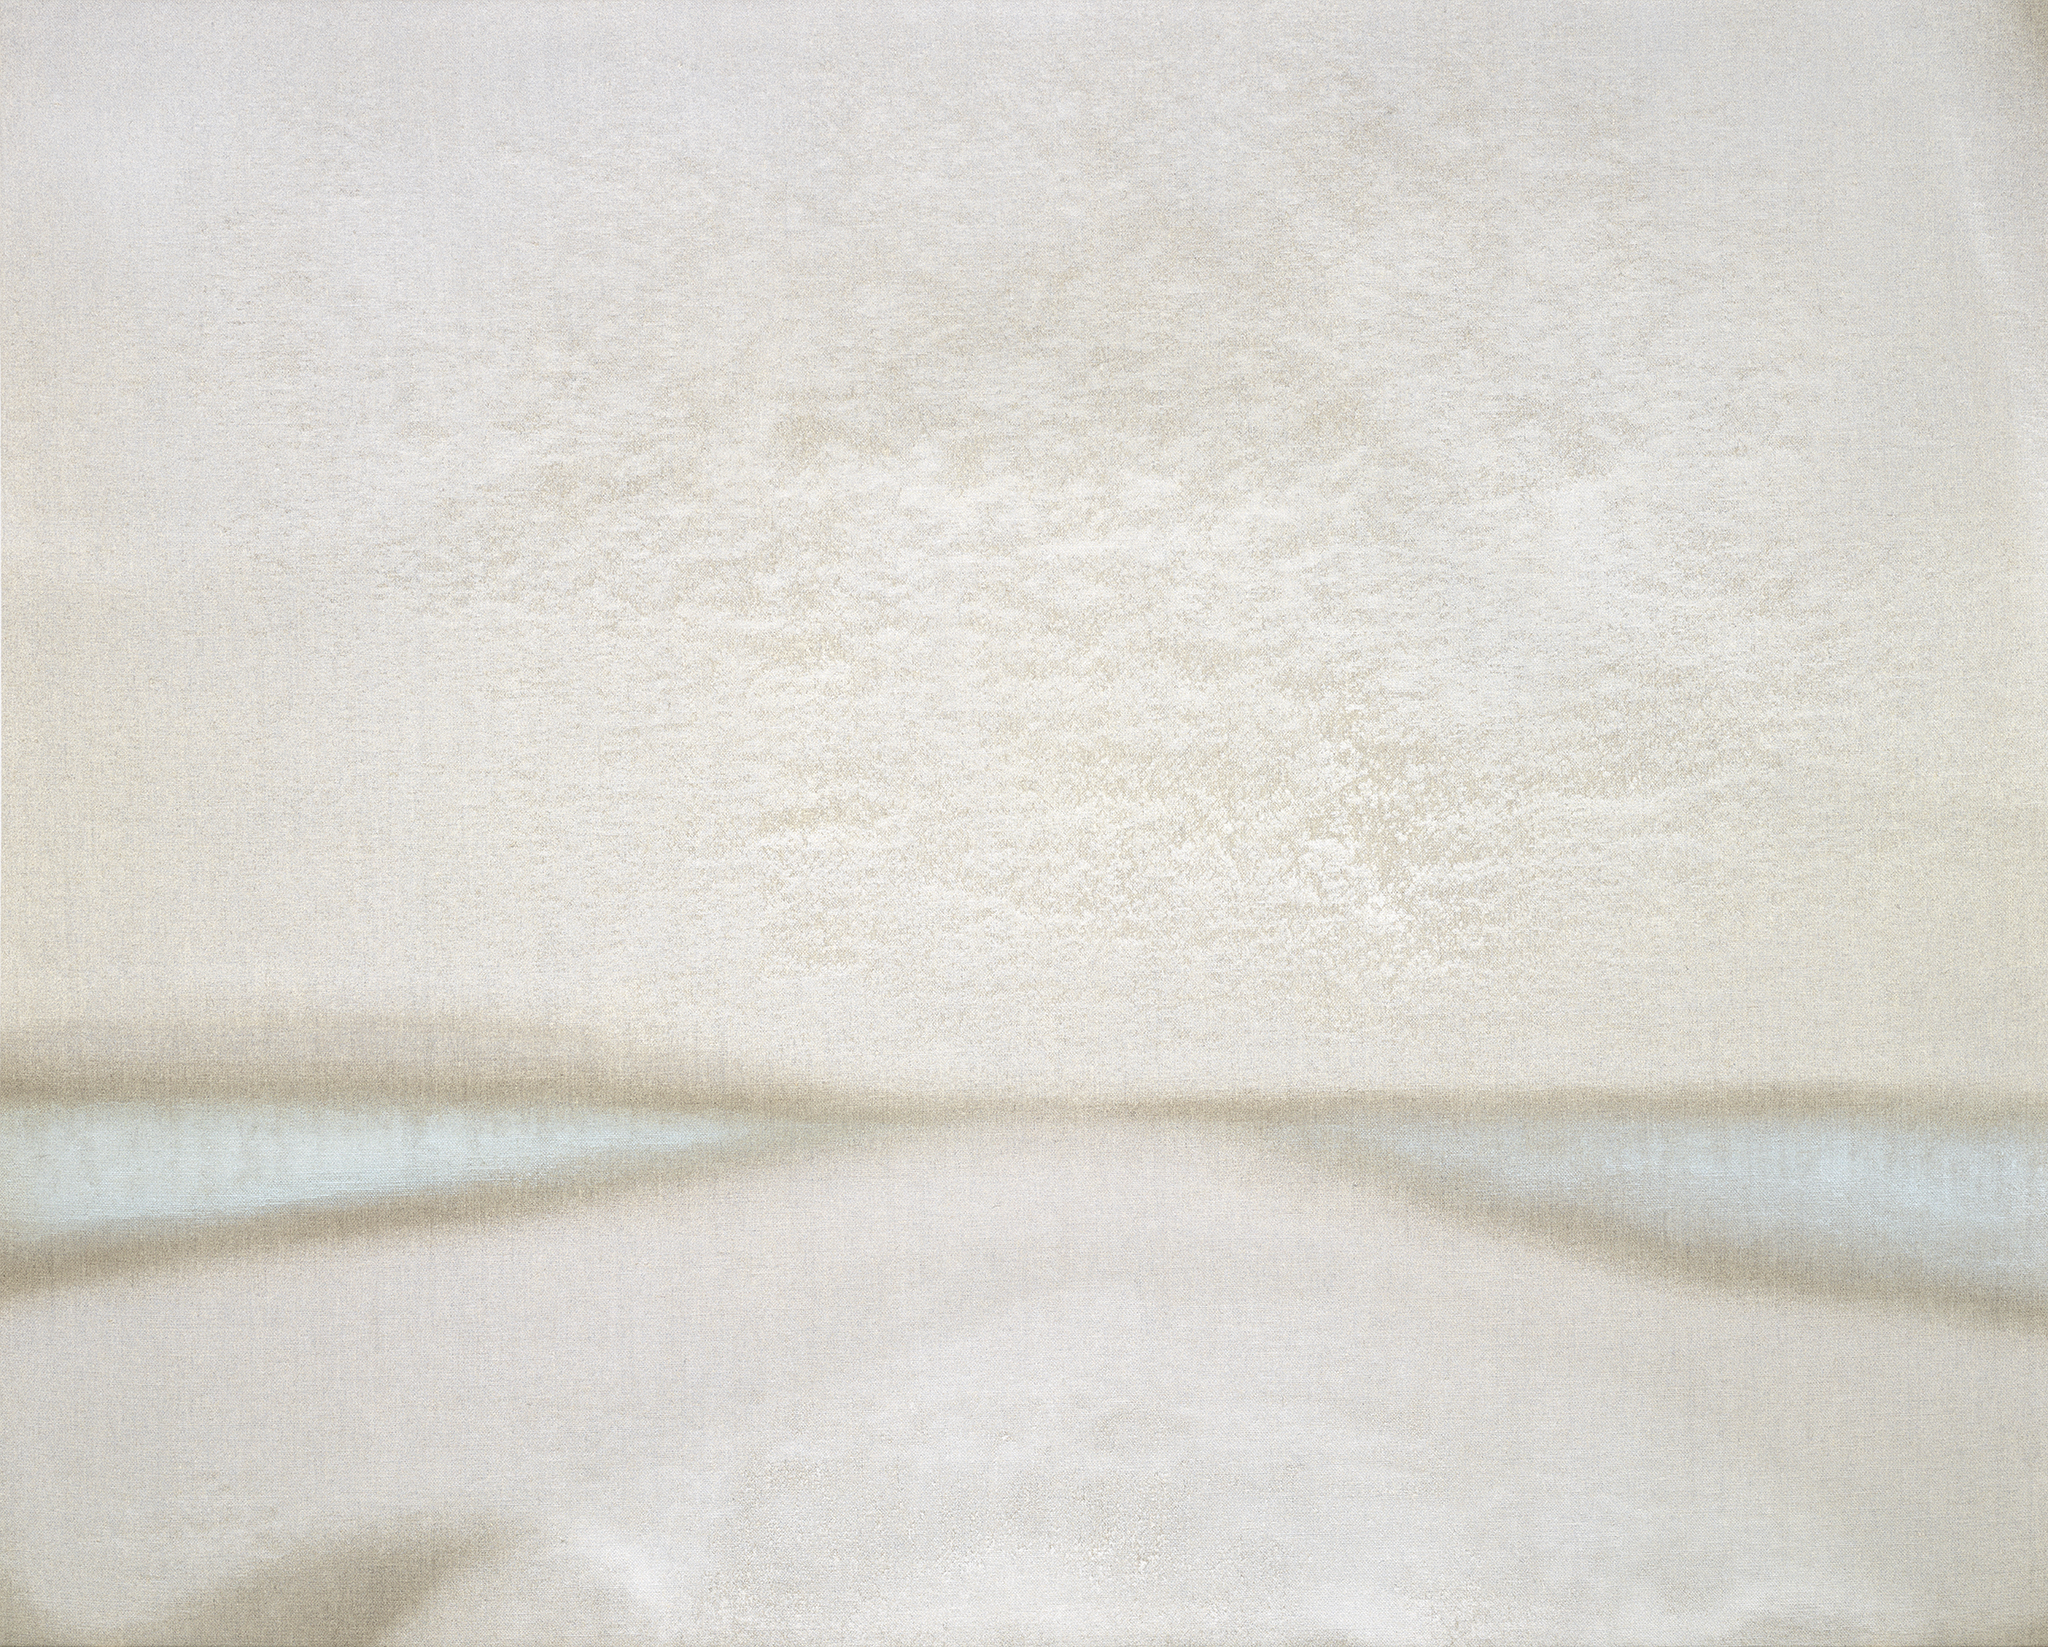 Untitled (White), 2018. Oil on Linen, 48" x 60”.